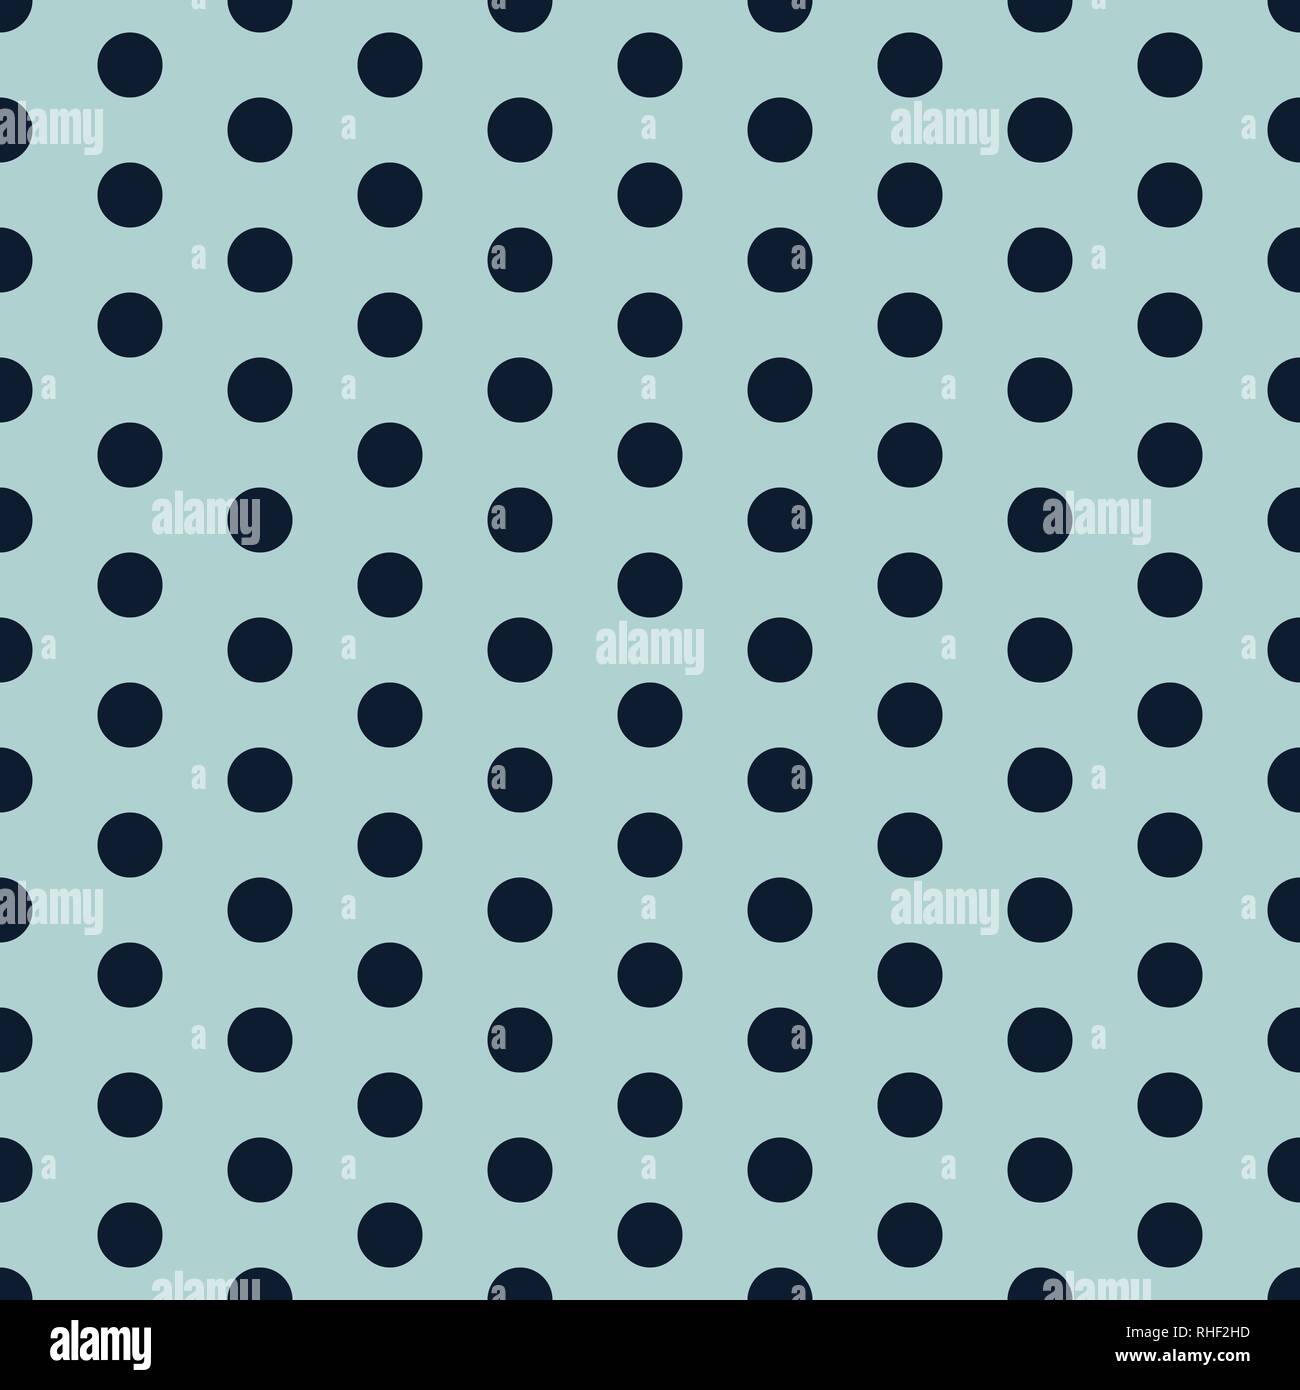 bright blue polka dot backgrounds